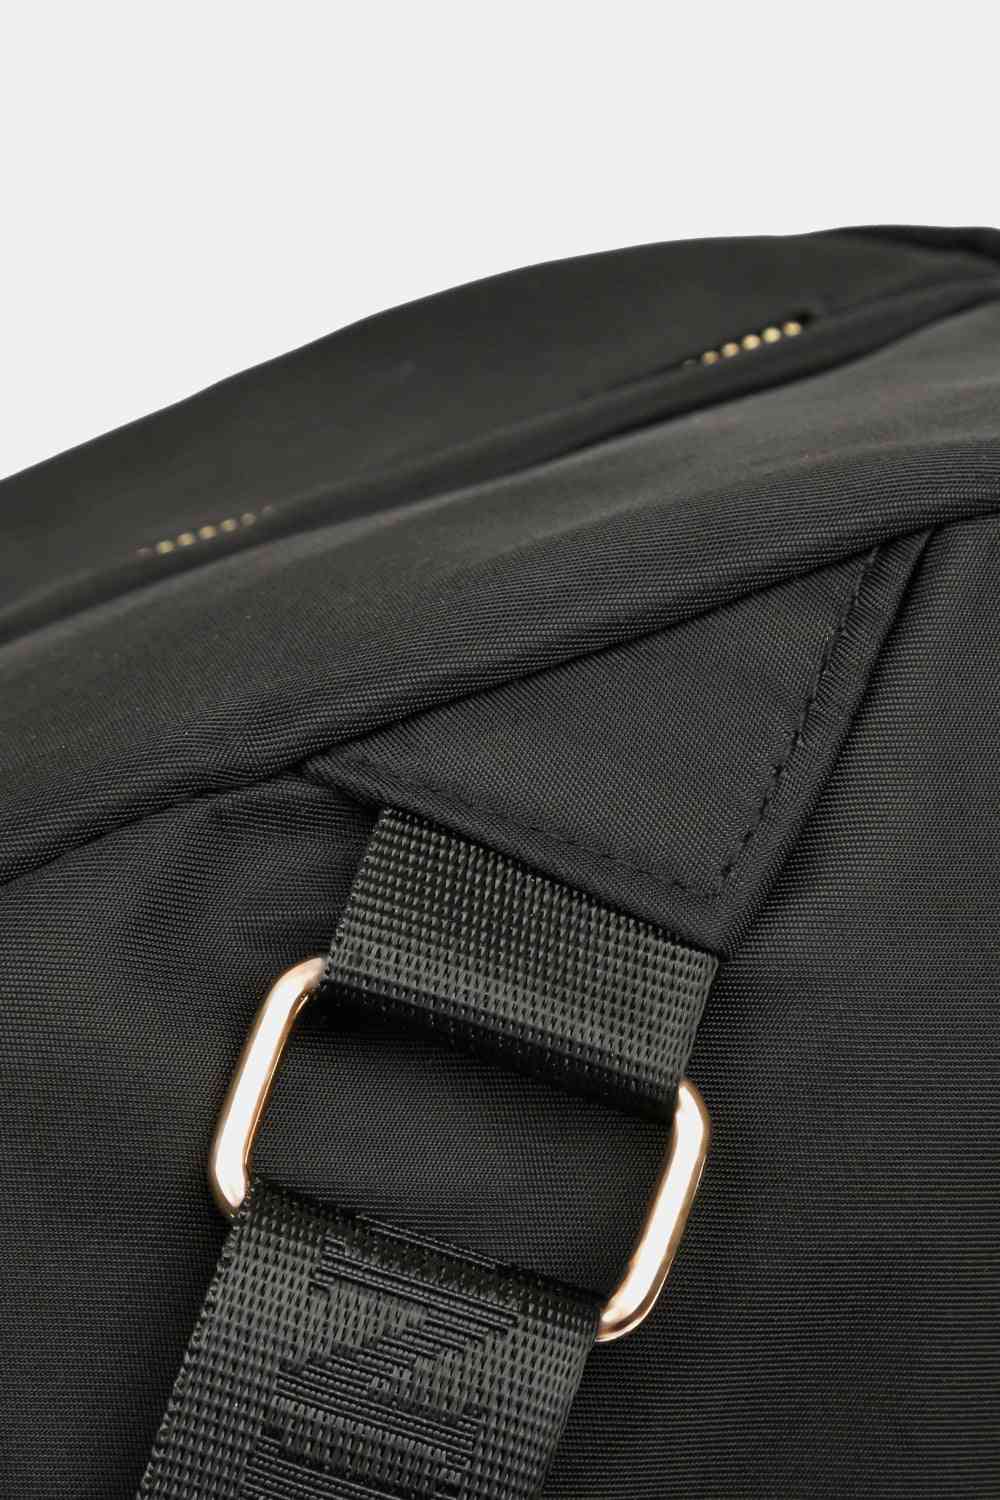 Medium Polyester Backpack - TRENDMELO